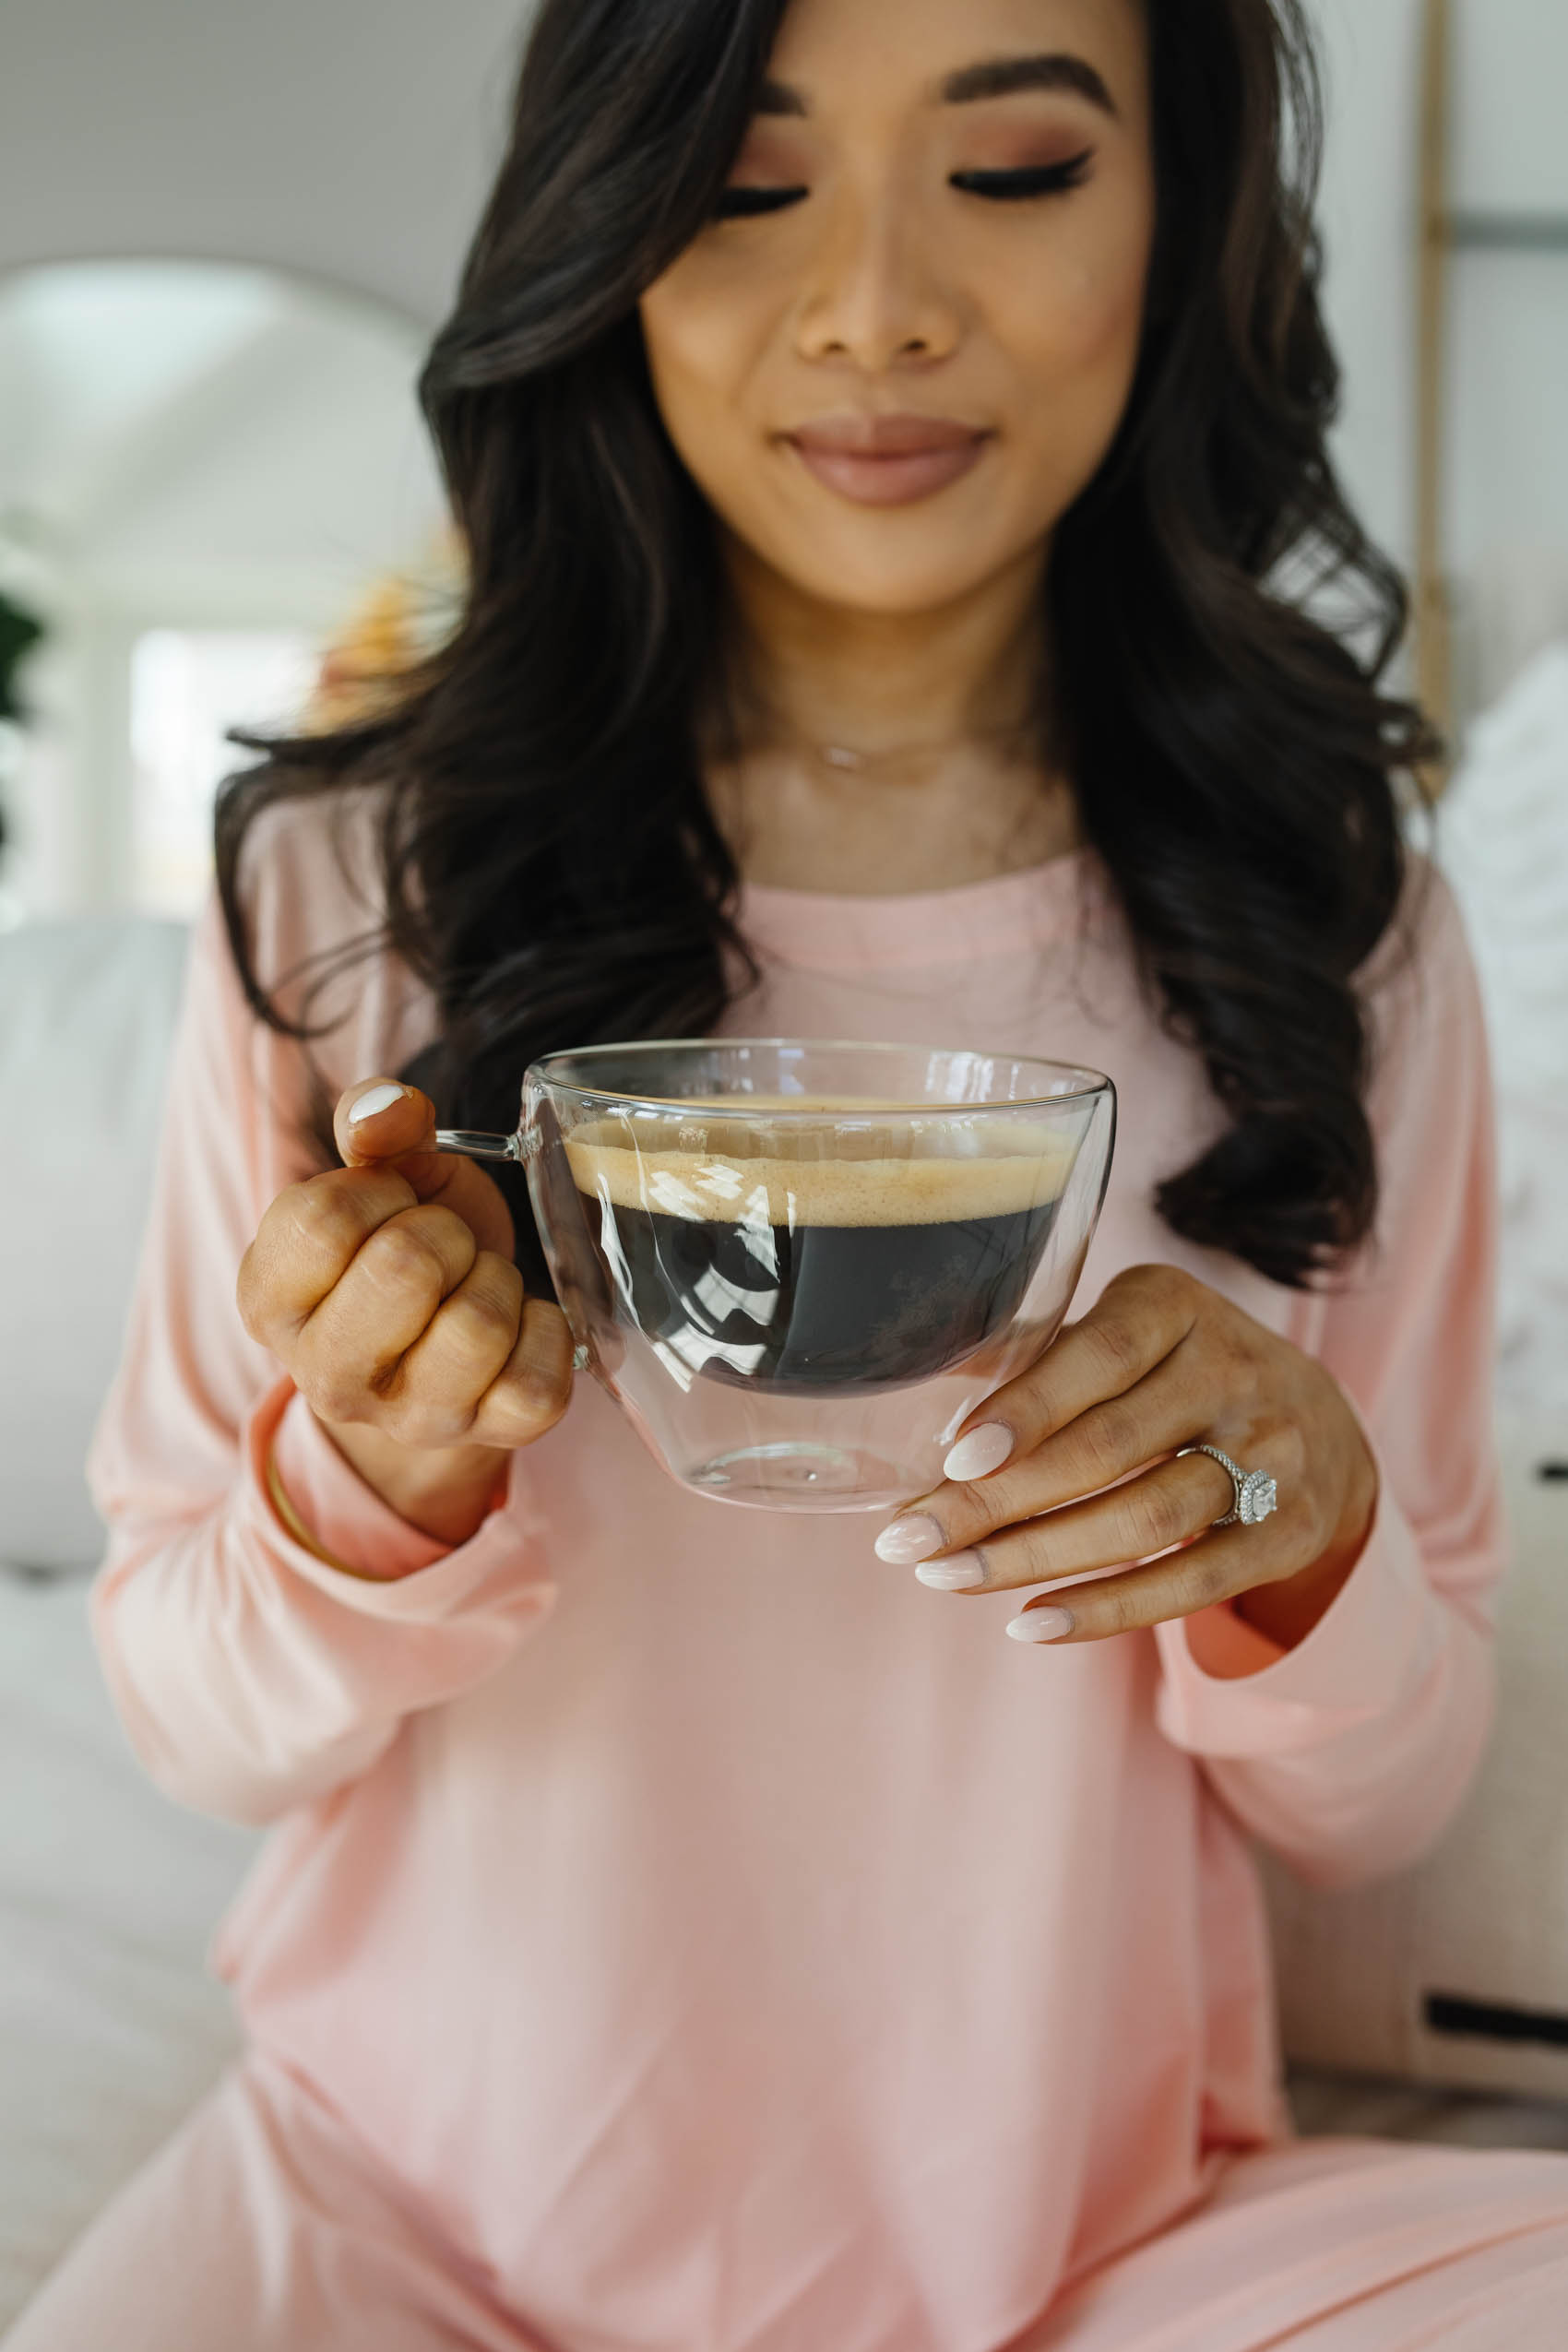 Asian woman holding a glass mug with coffee wearing an eberjey pj set